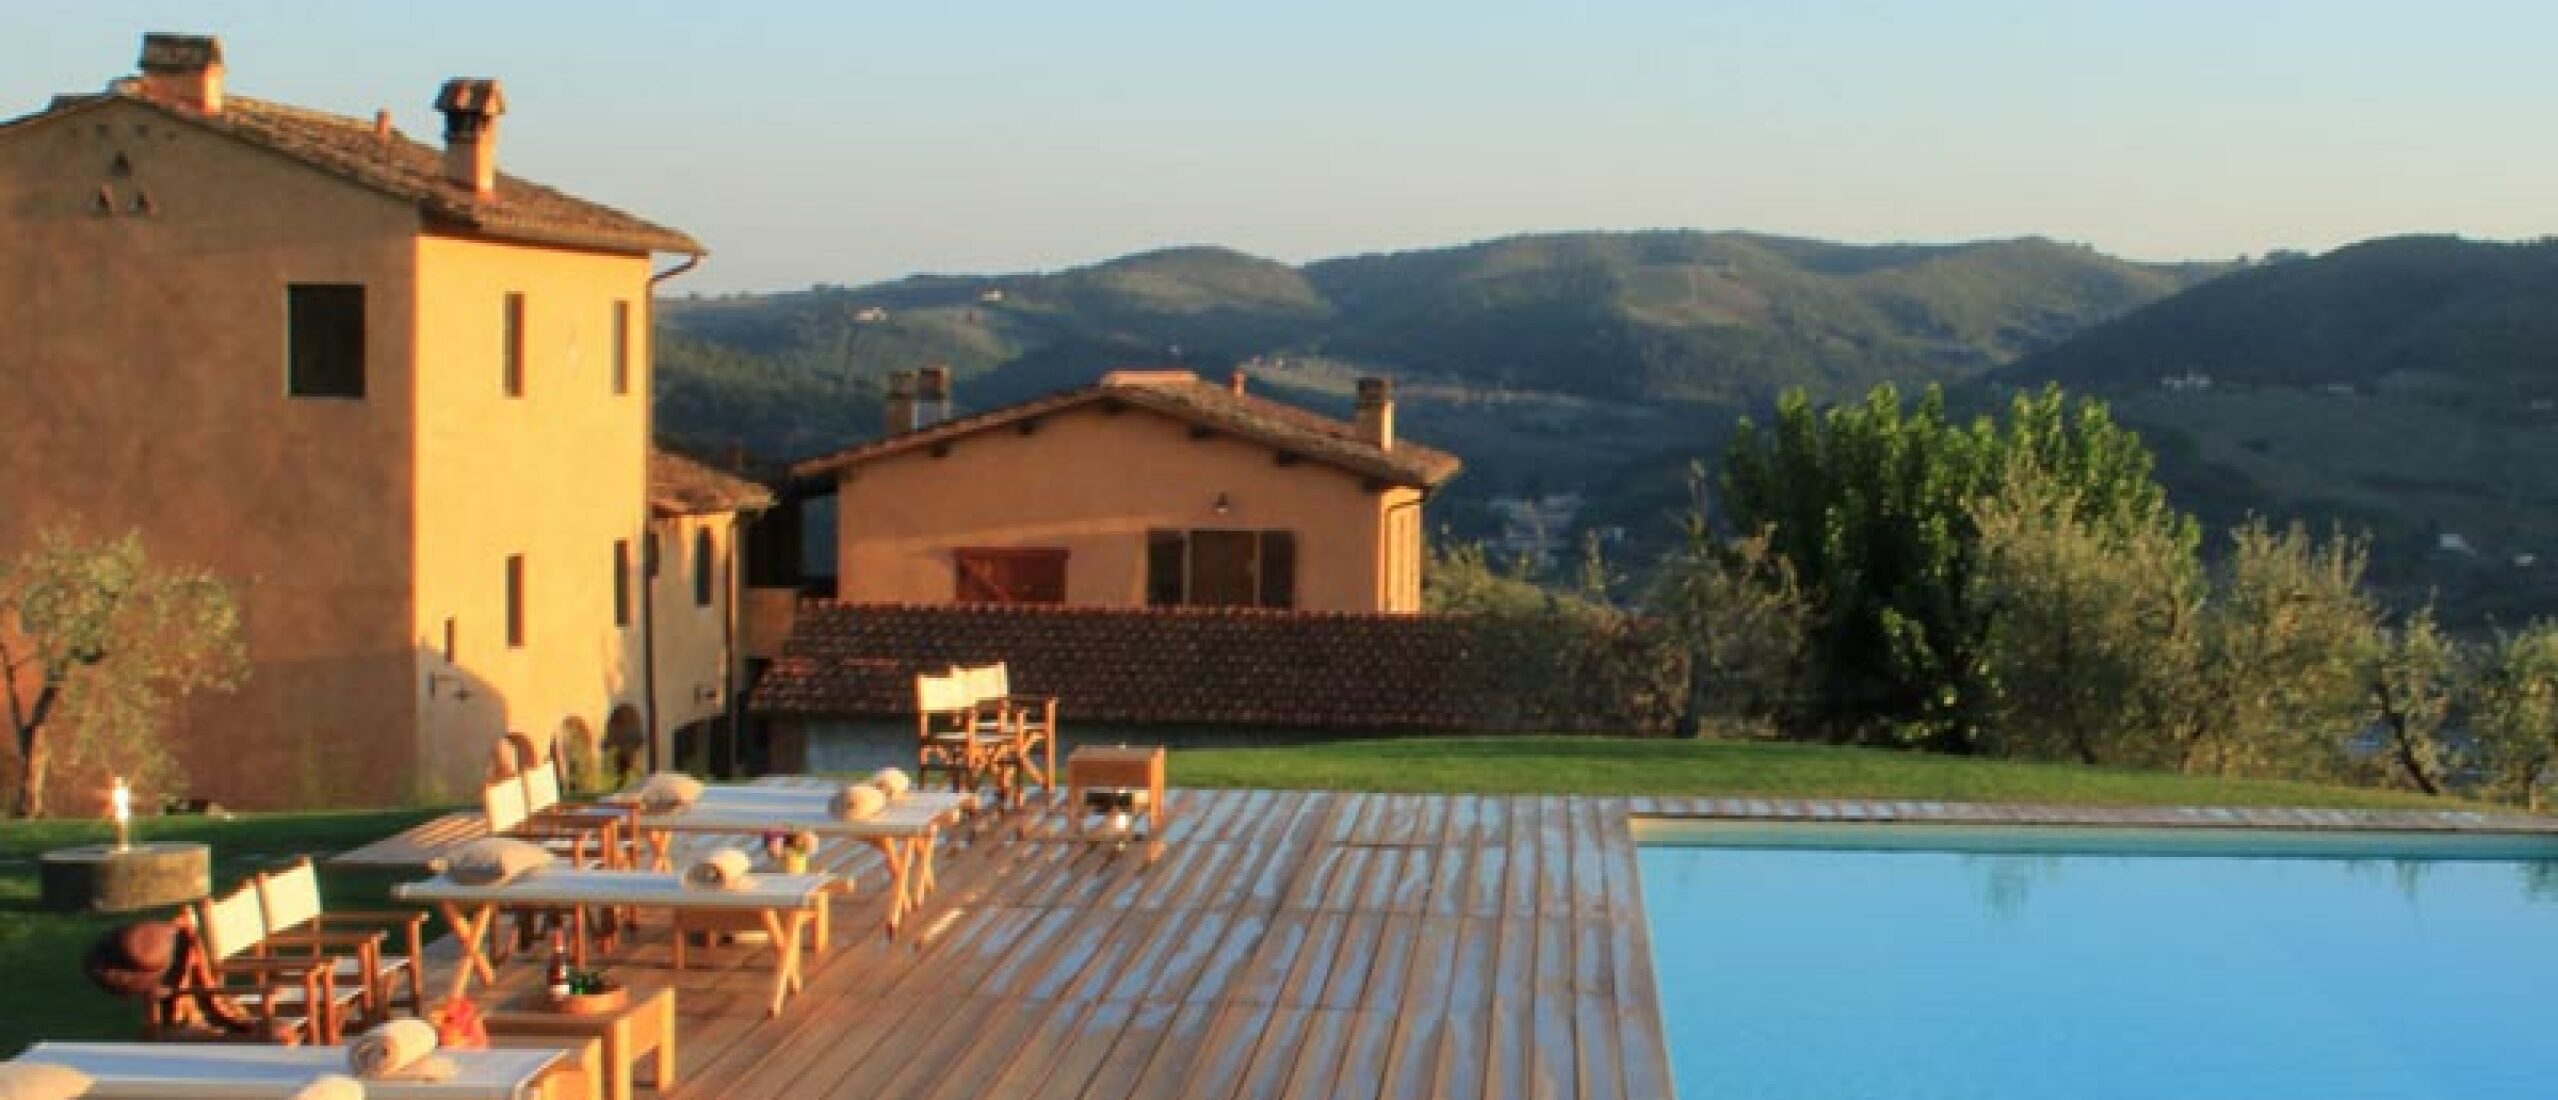 Agriturismo met zwembad in Toscane